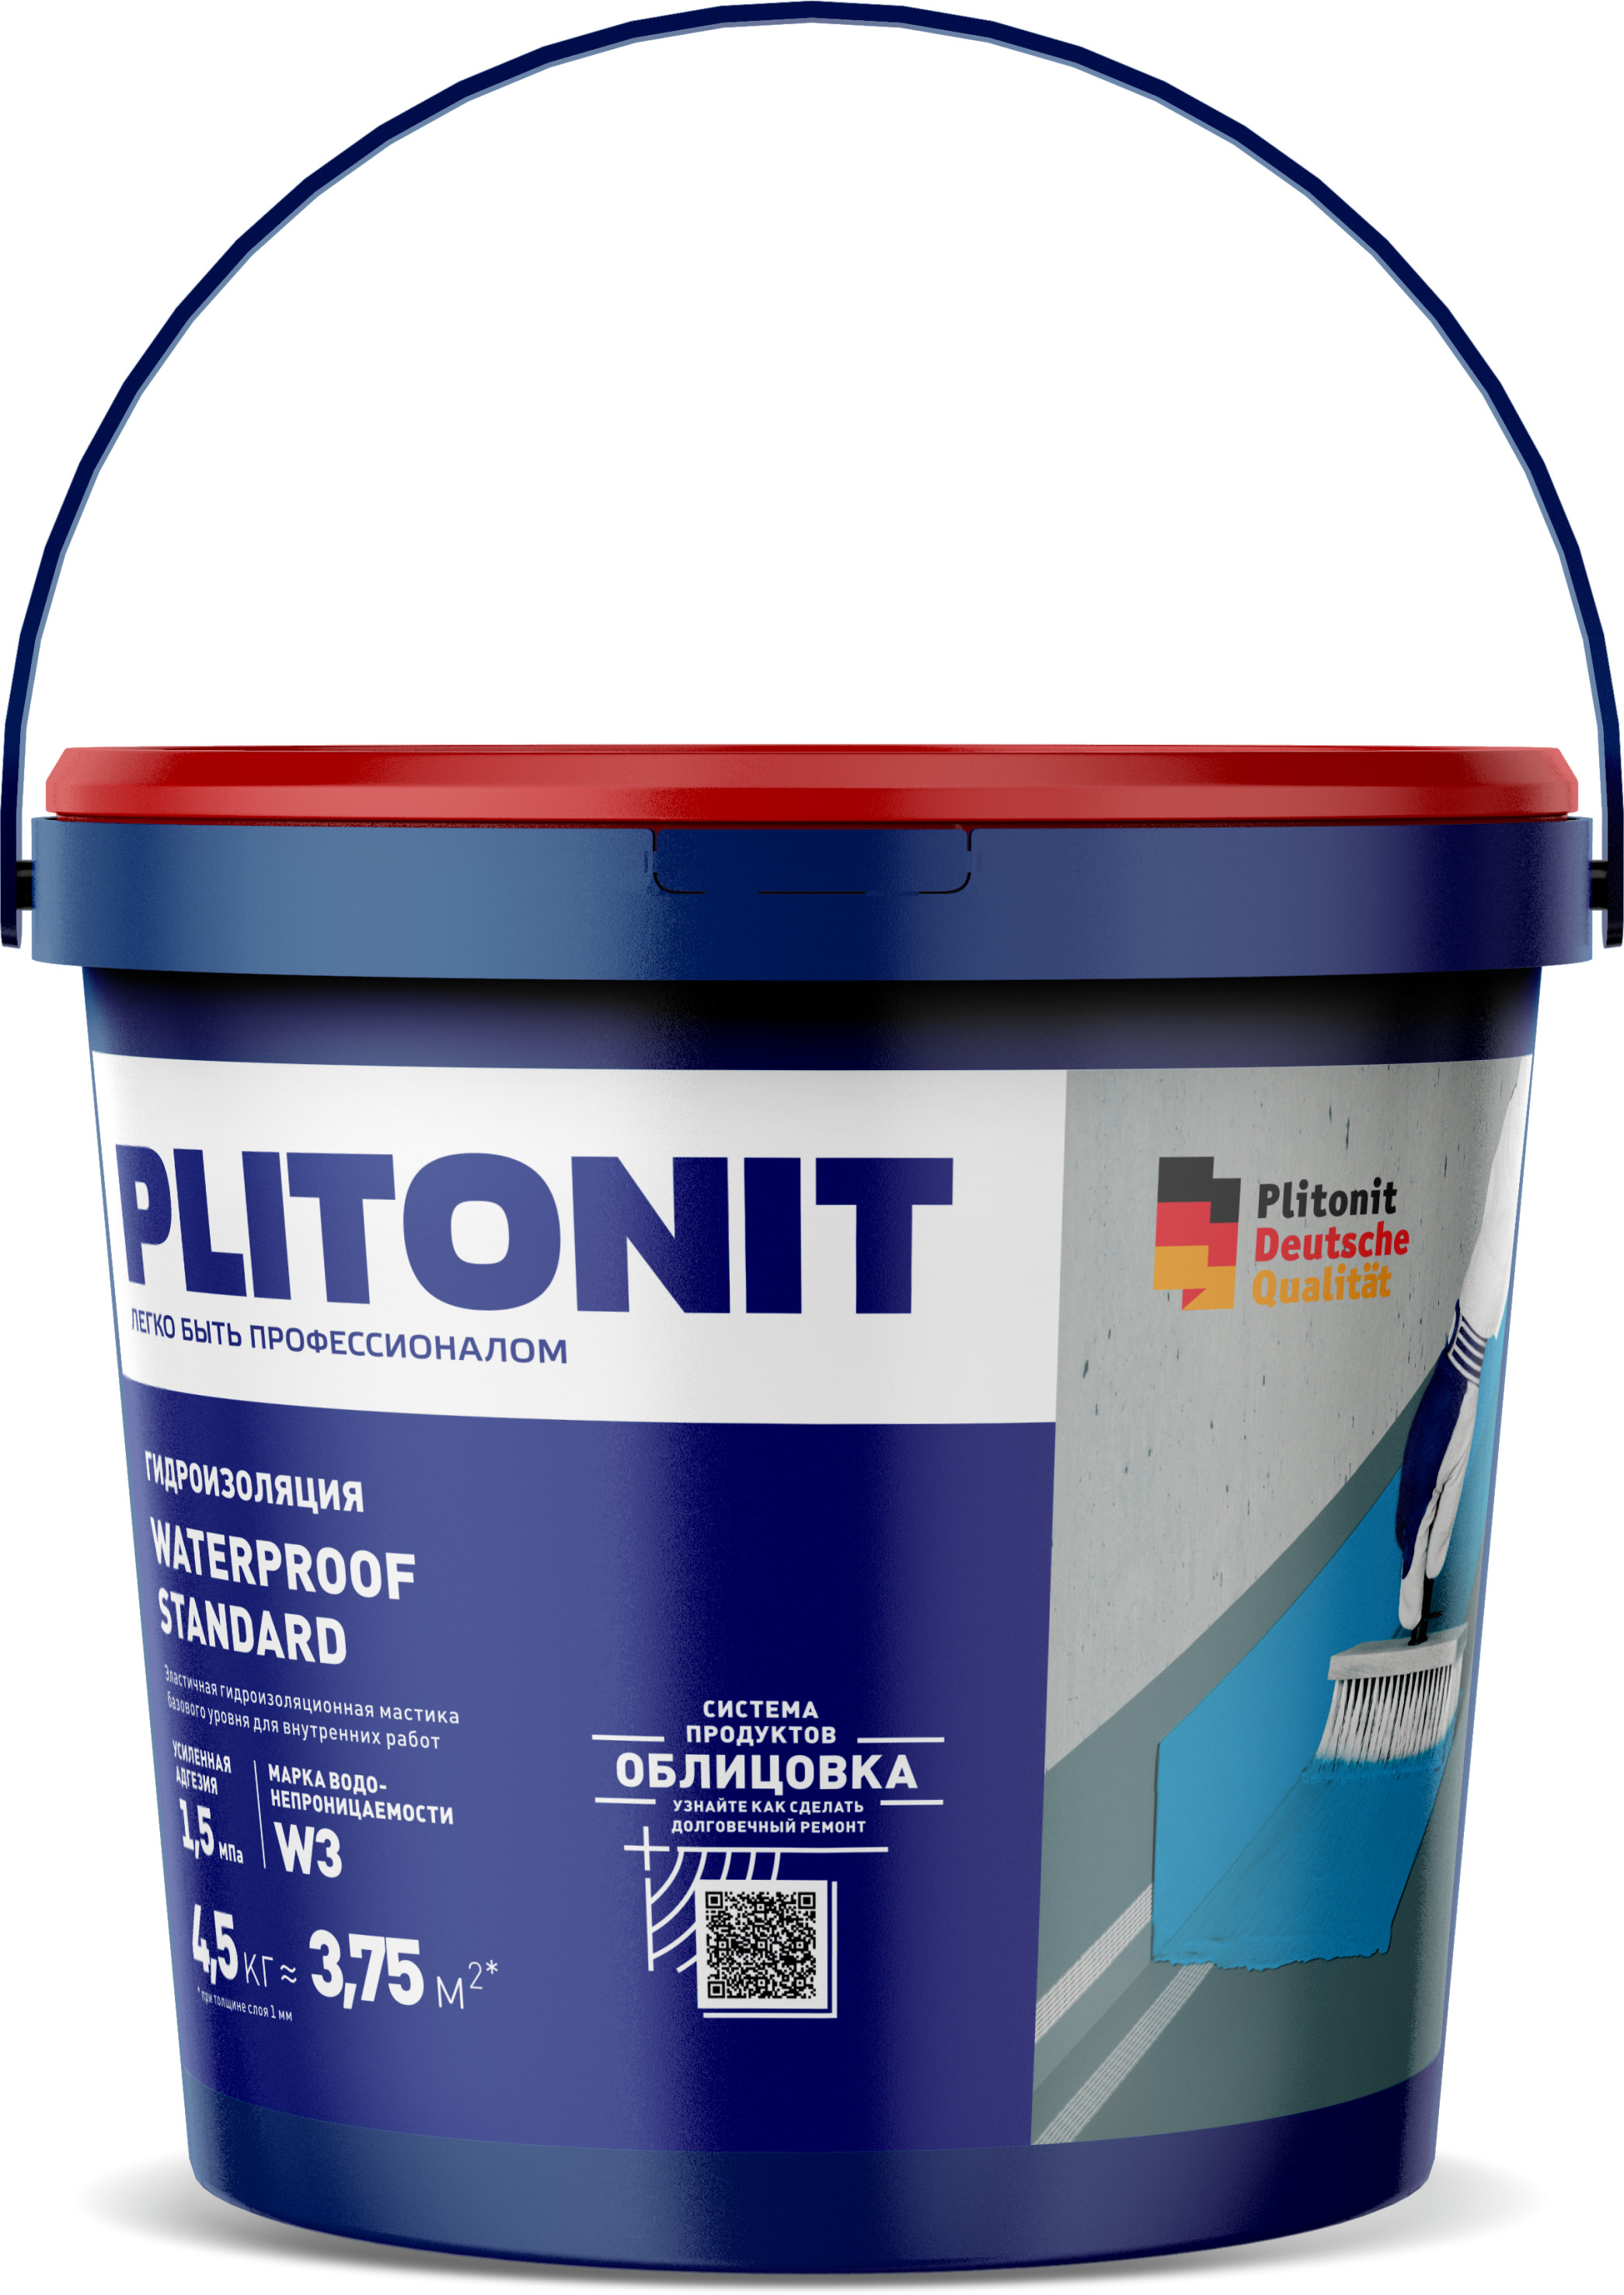 PLITONIT WaterProof Standard - 4,5 эластичная гидроизоляционная мастика базового уровня для внутренних работ